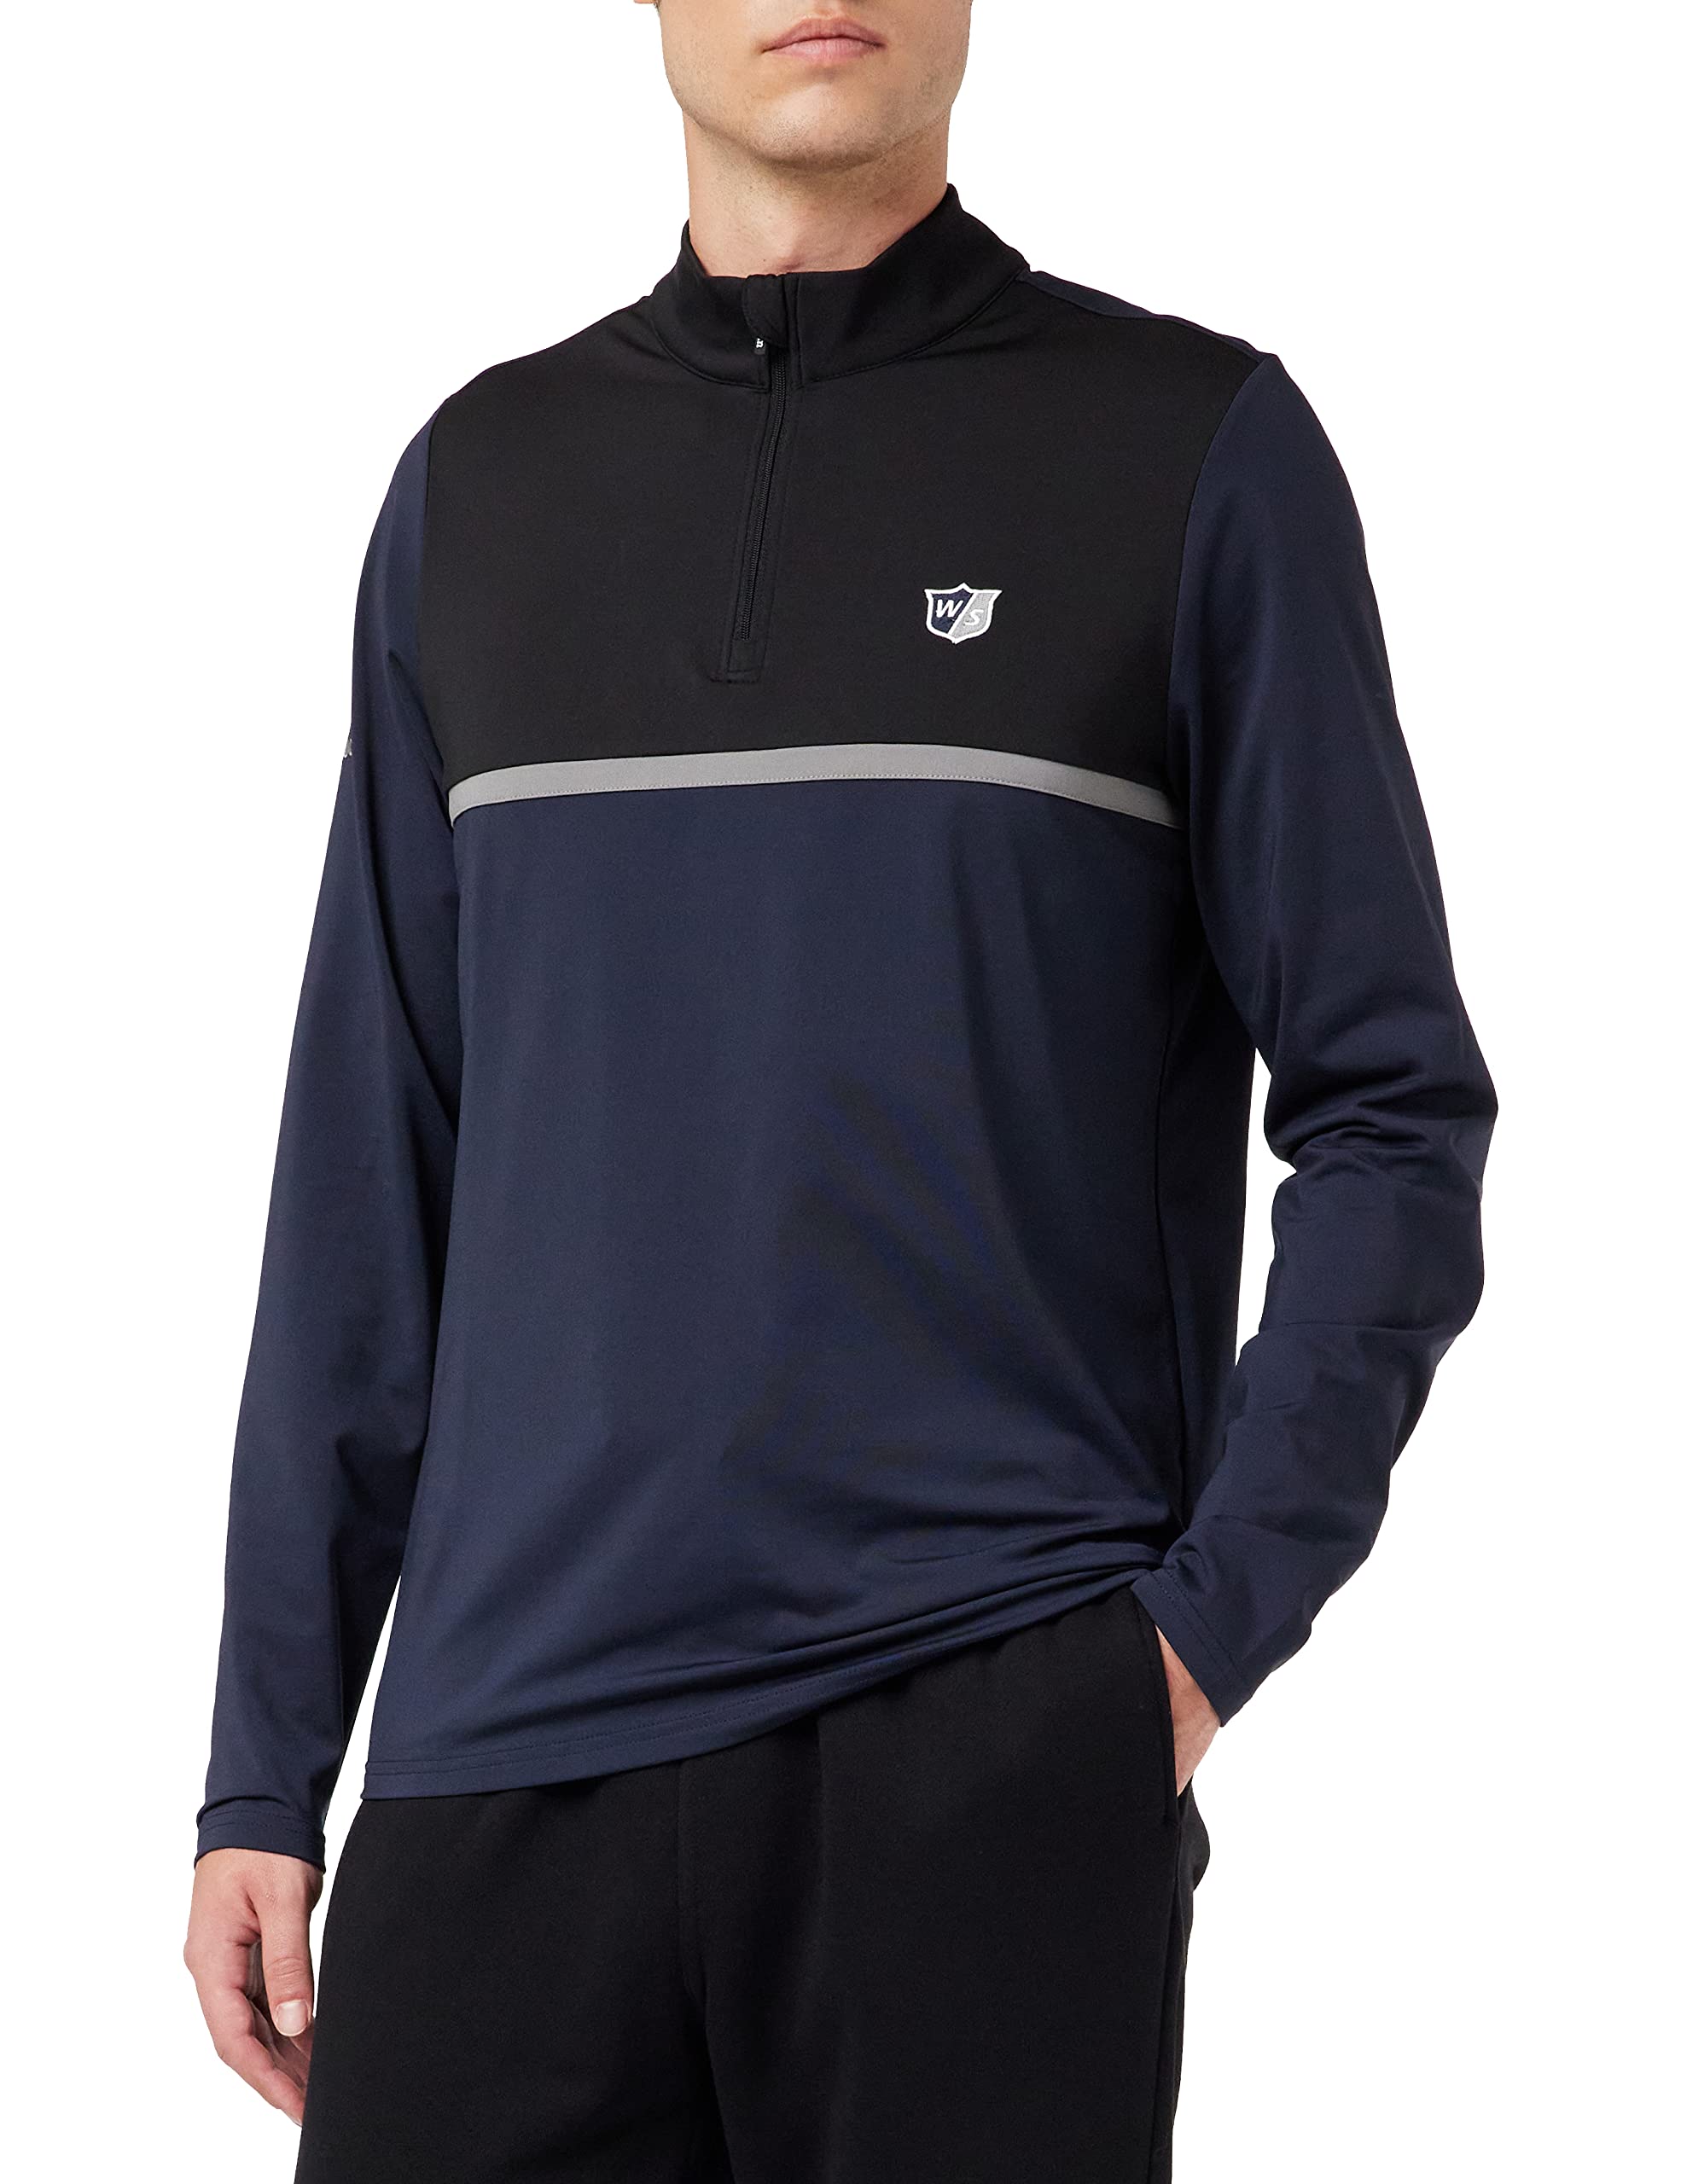 Wilson Staff Herren Golf-Sweatshirt, Thermal Tech, Polyester/Spandex